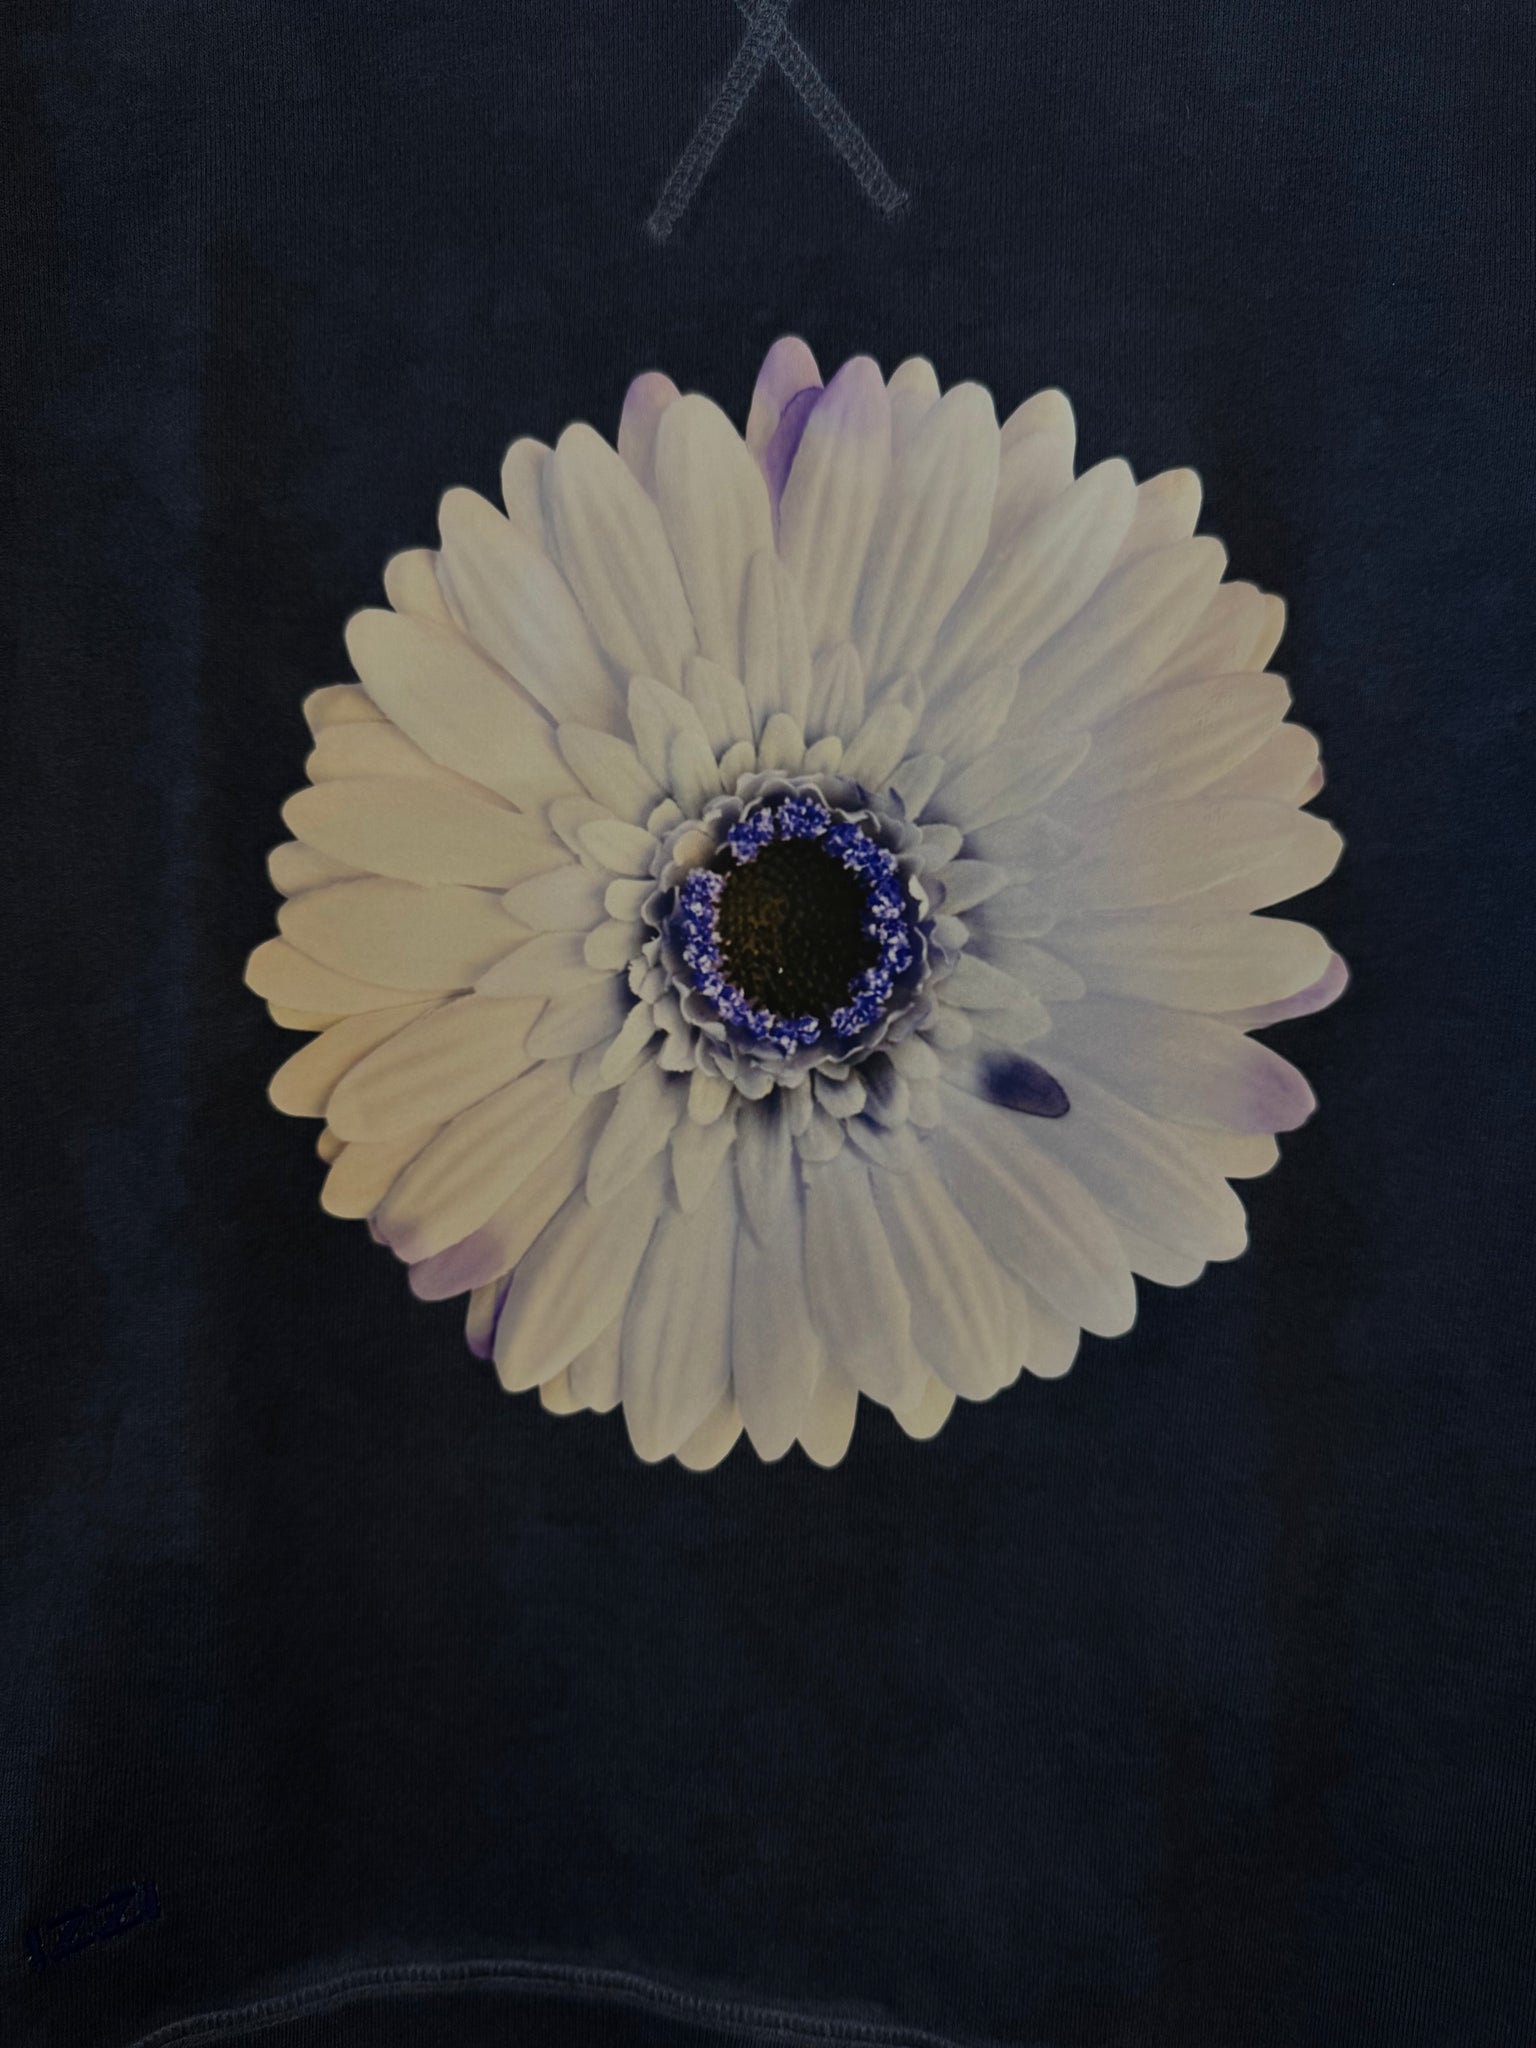 Indigo/Violet botanical